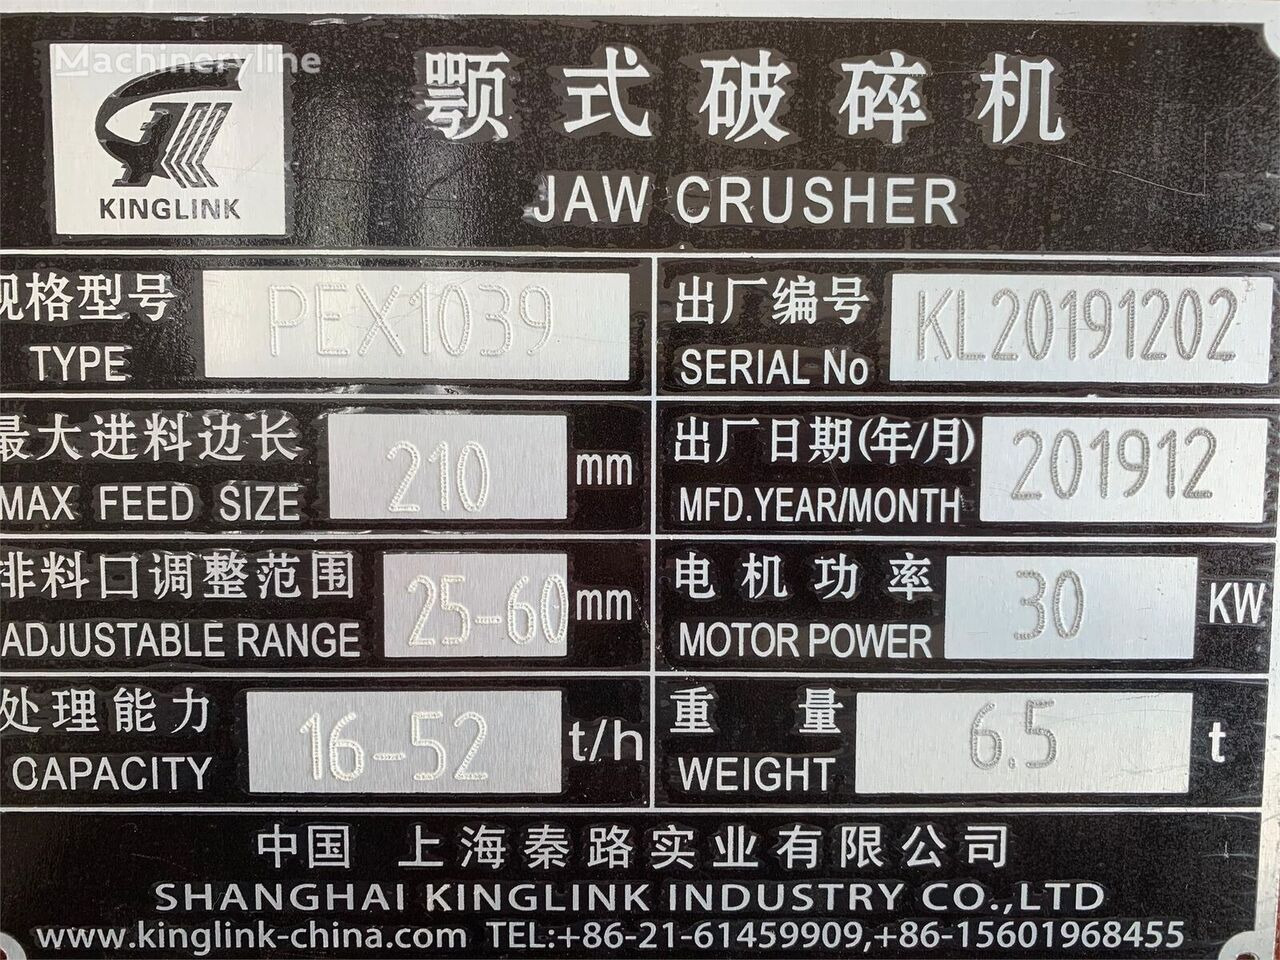 Trituradora de mandíbula nuevo Kinglink Jaw Crusher PEX1039 for Pebble Hard Stone: foto 4